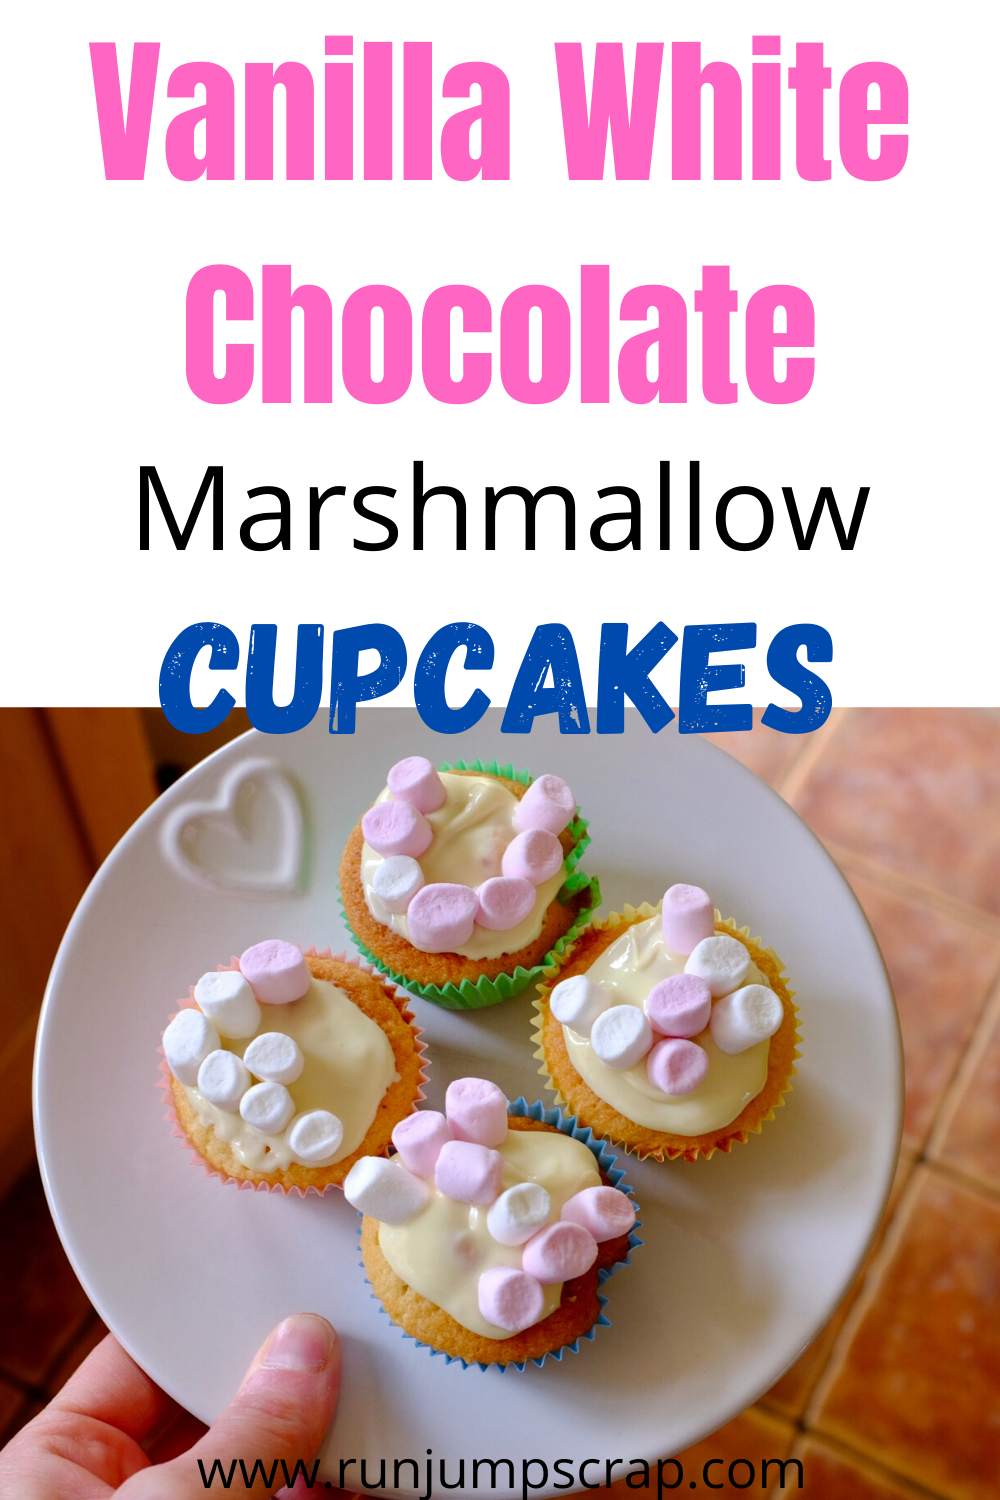 Vanilla white chocolate marshmallow cupcakes